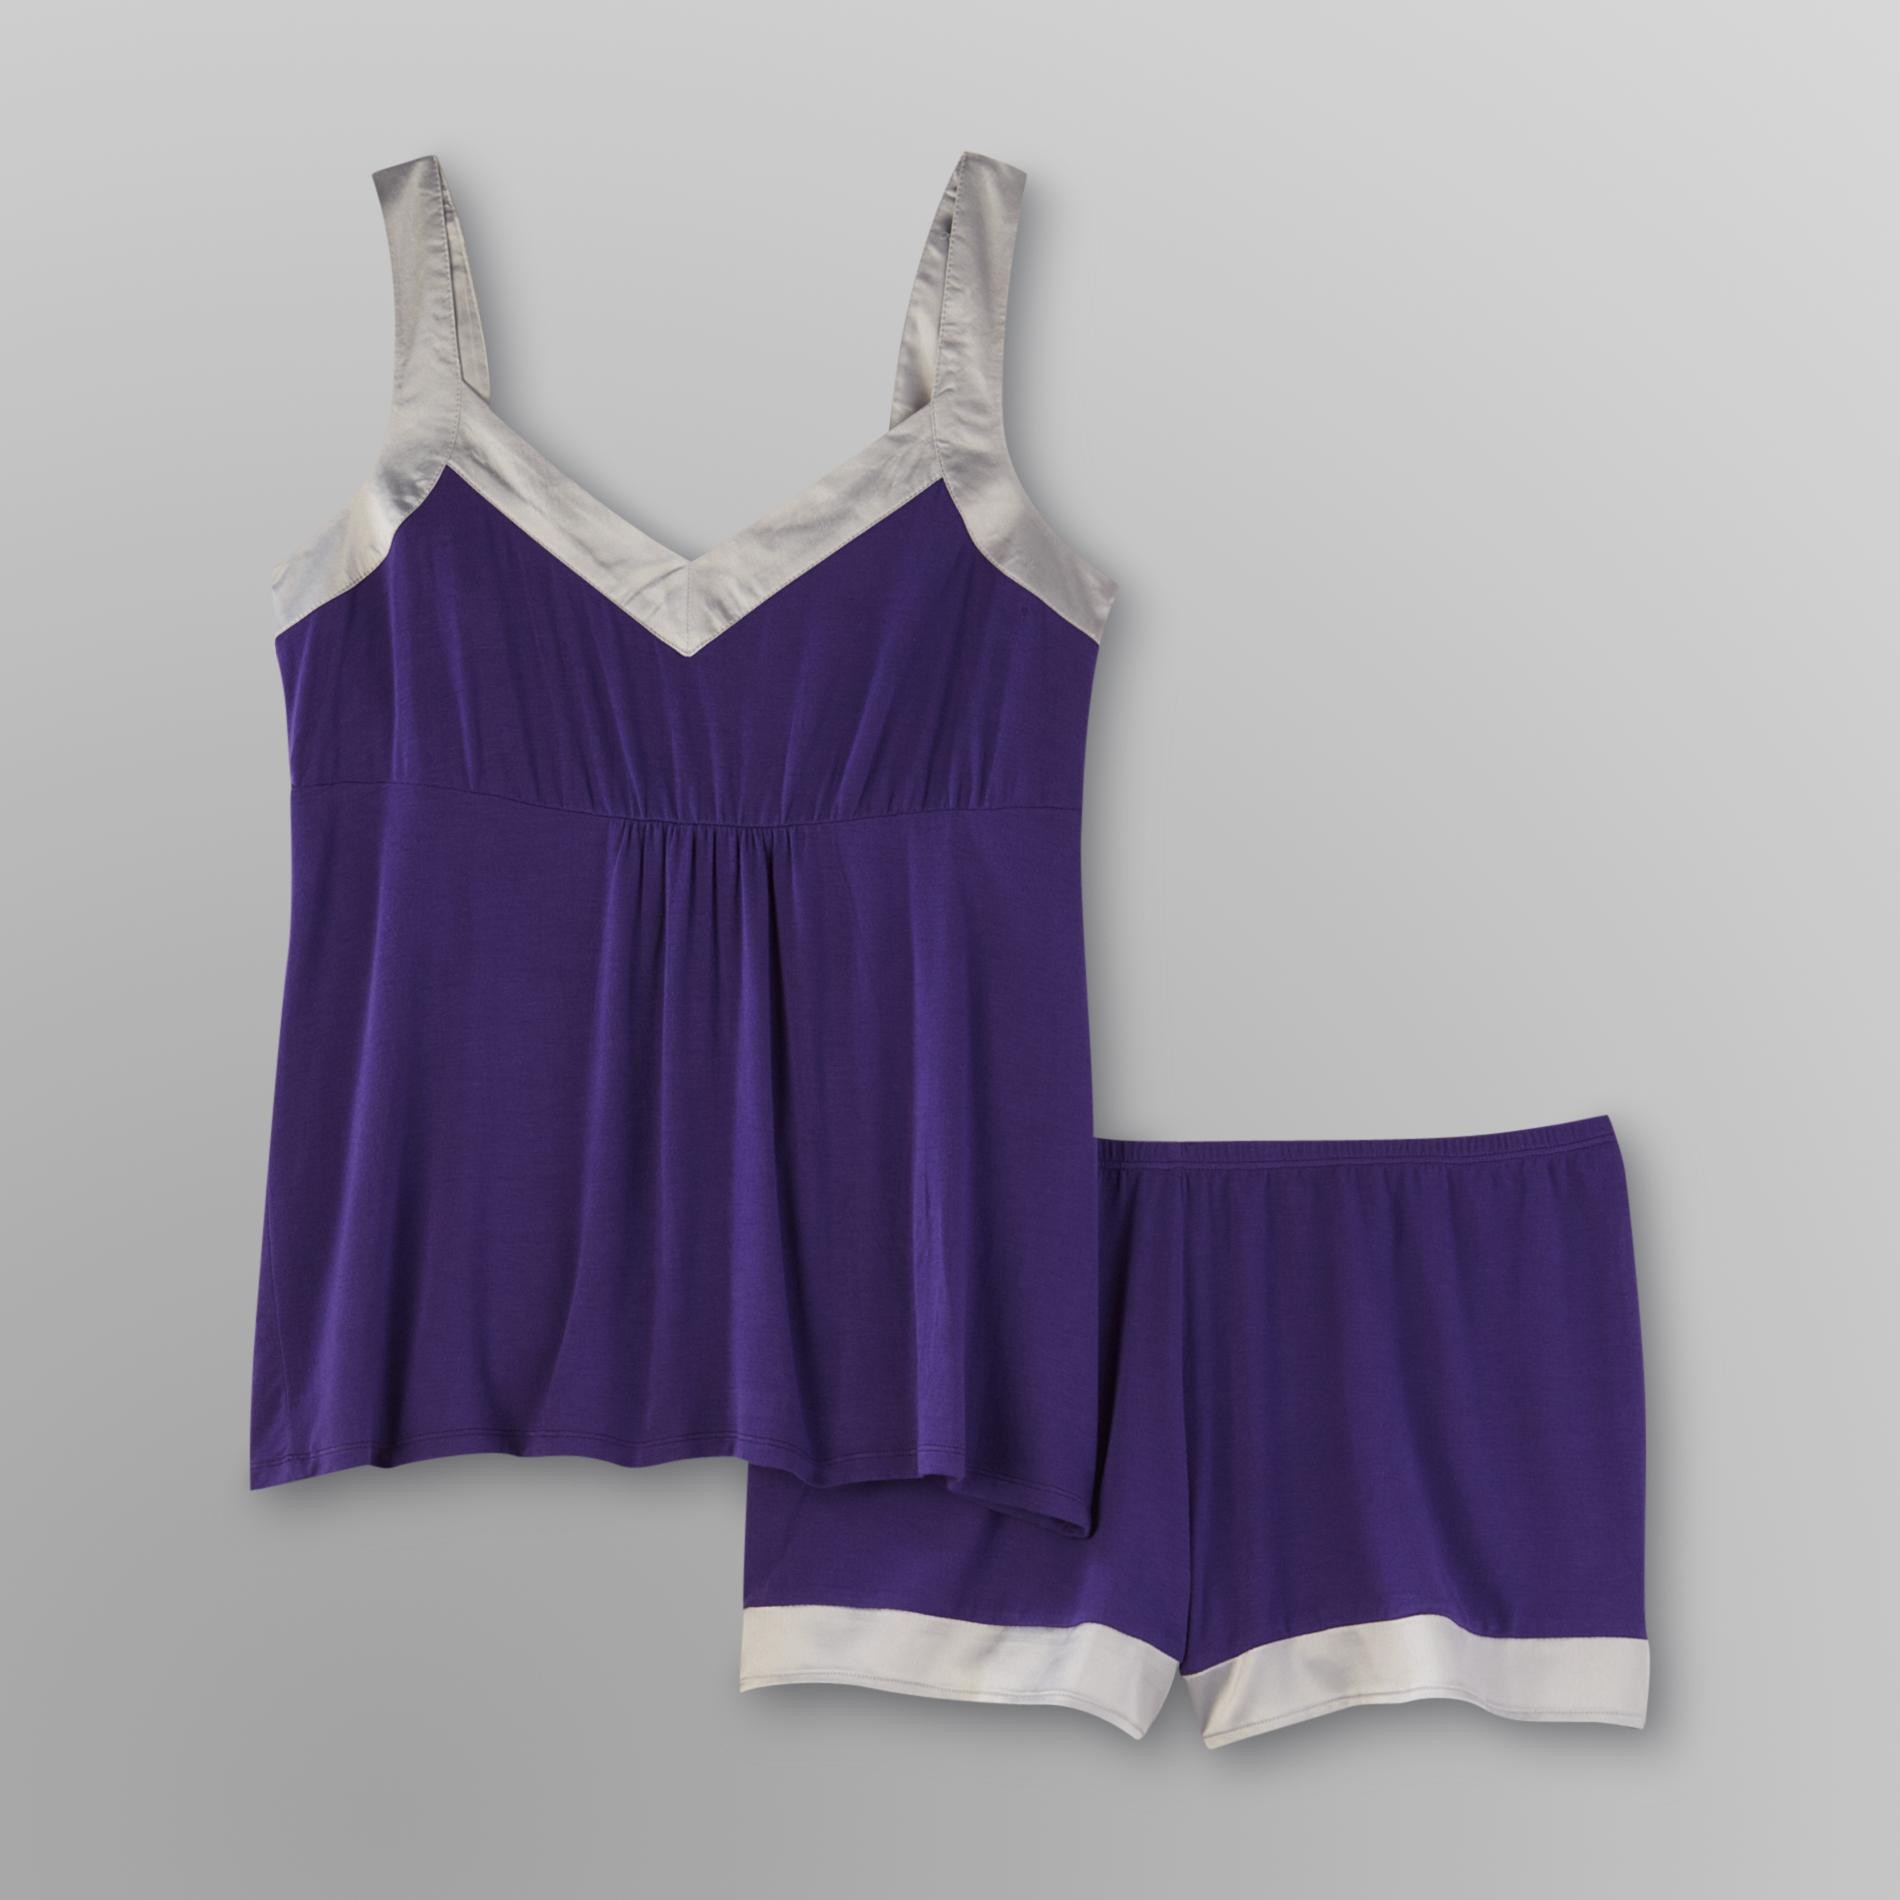 Covington Women's Satin-Trimmed Pajamas - Shorts